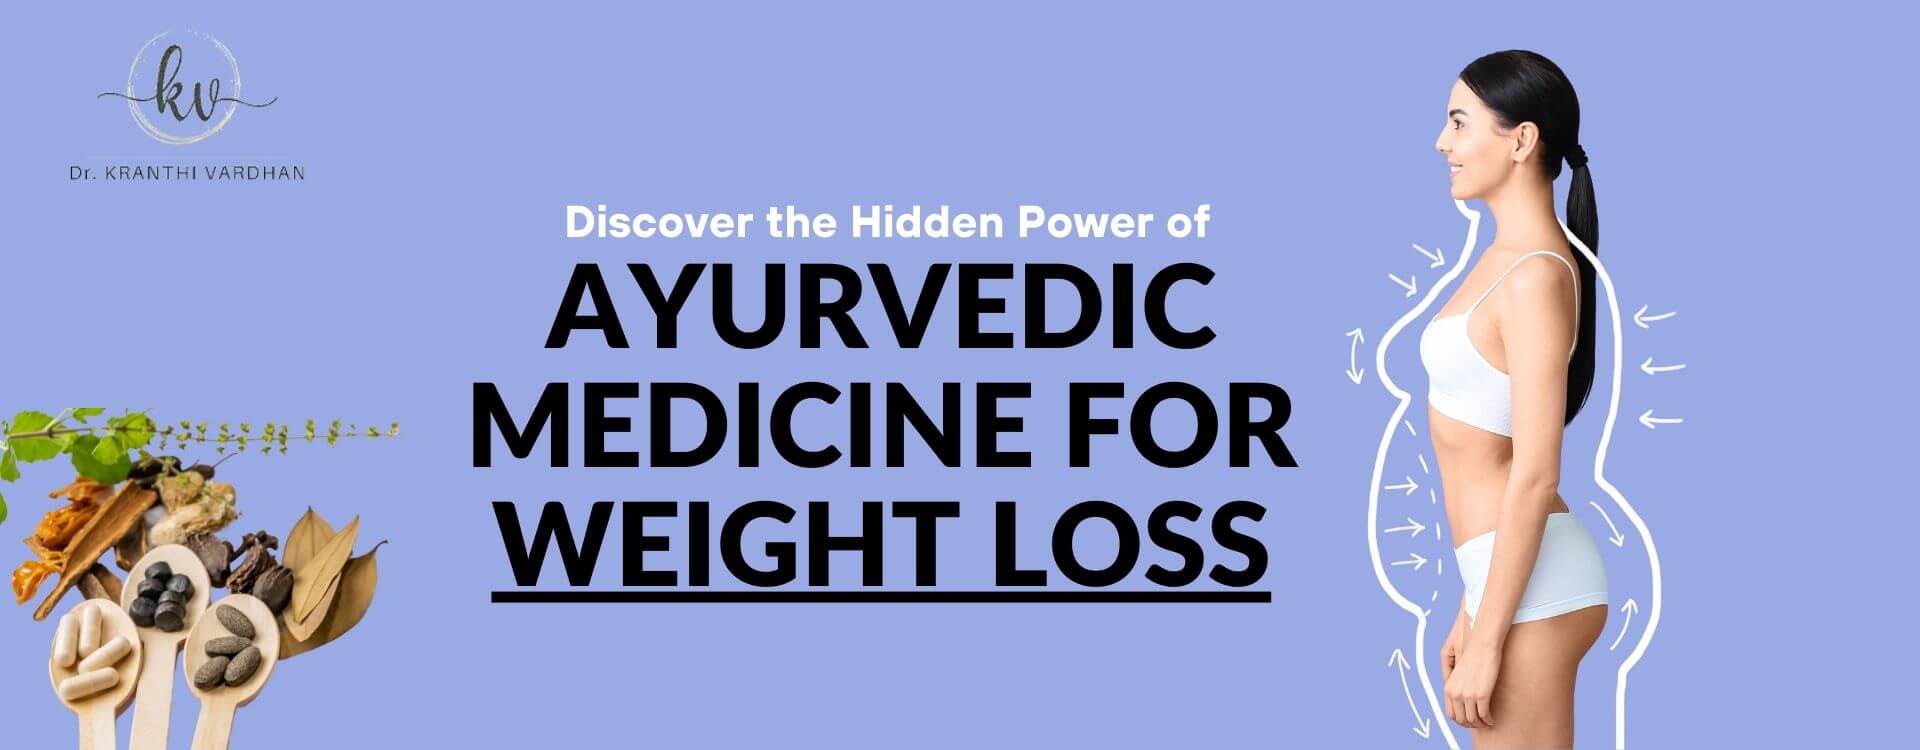 Ayurvedic Medicine for weight loss